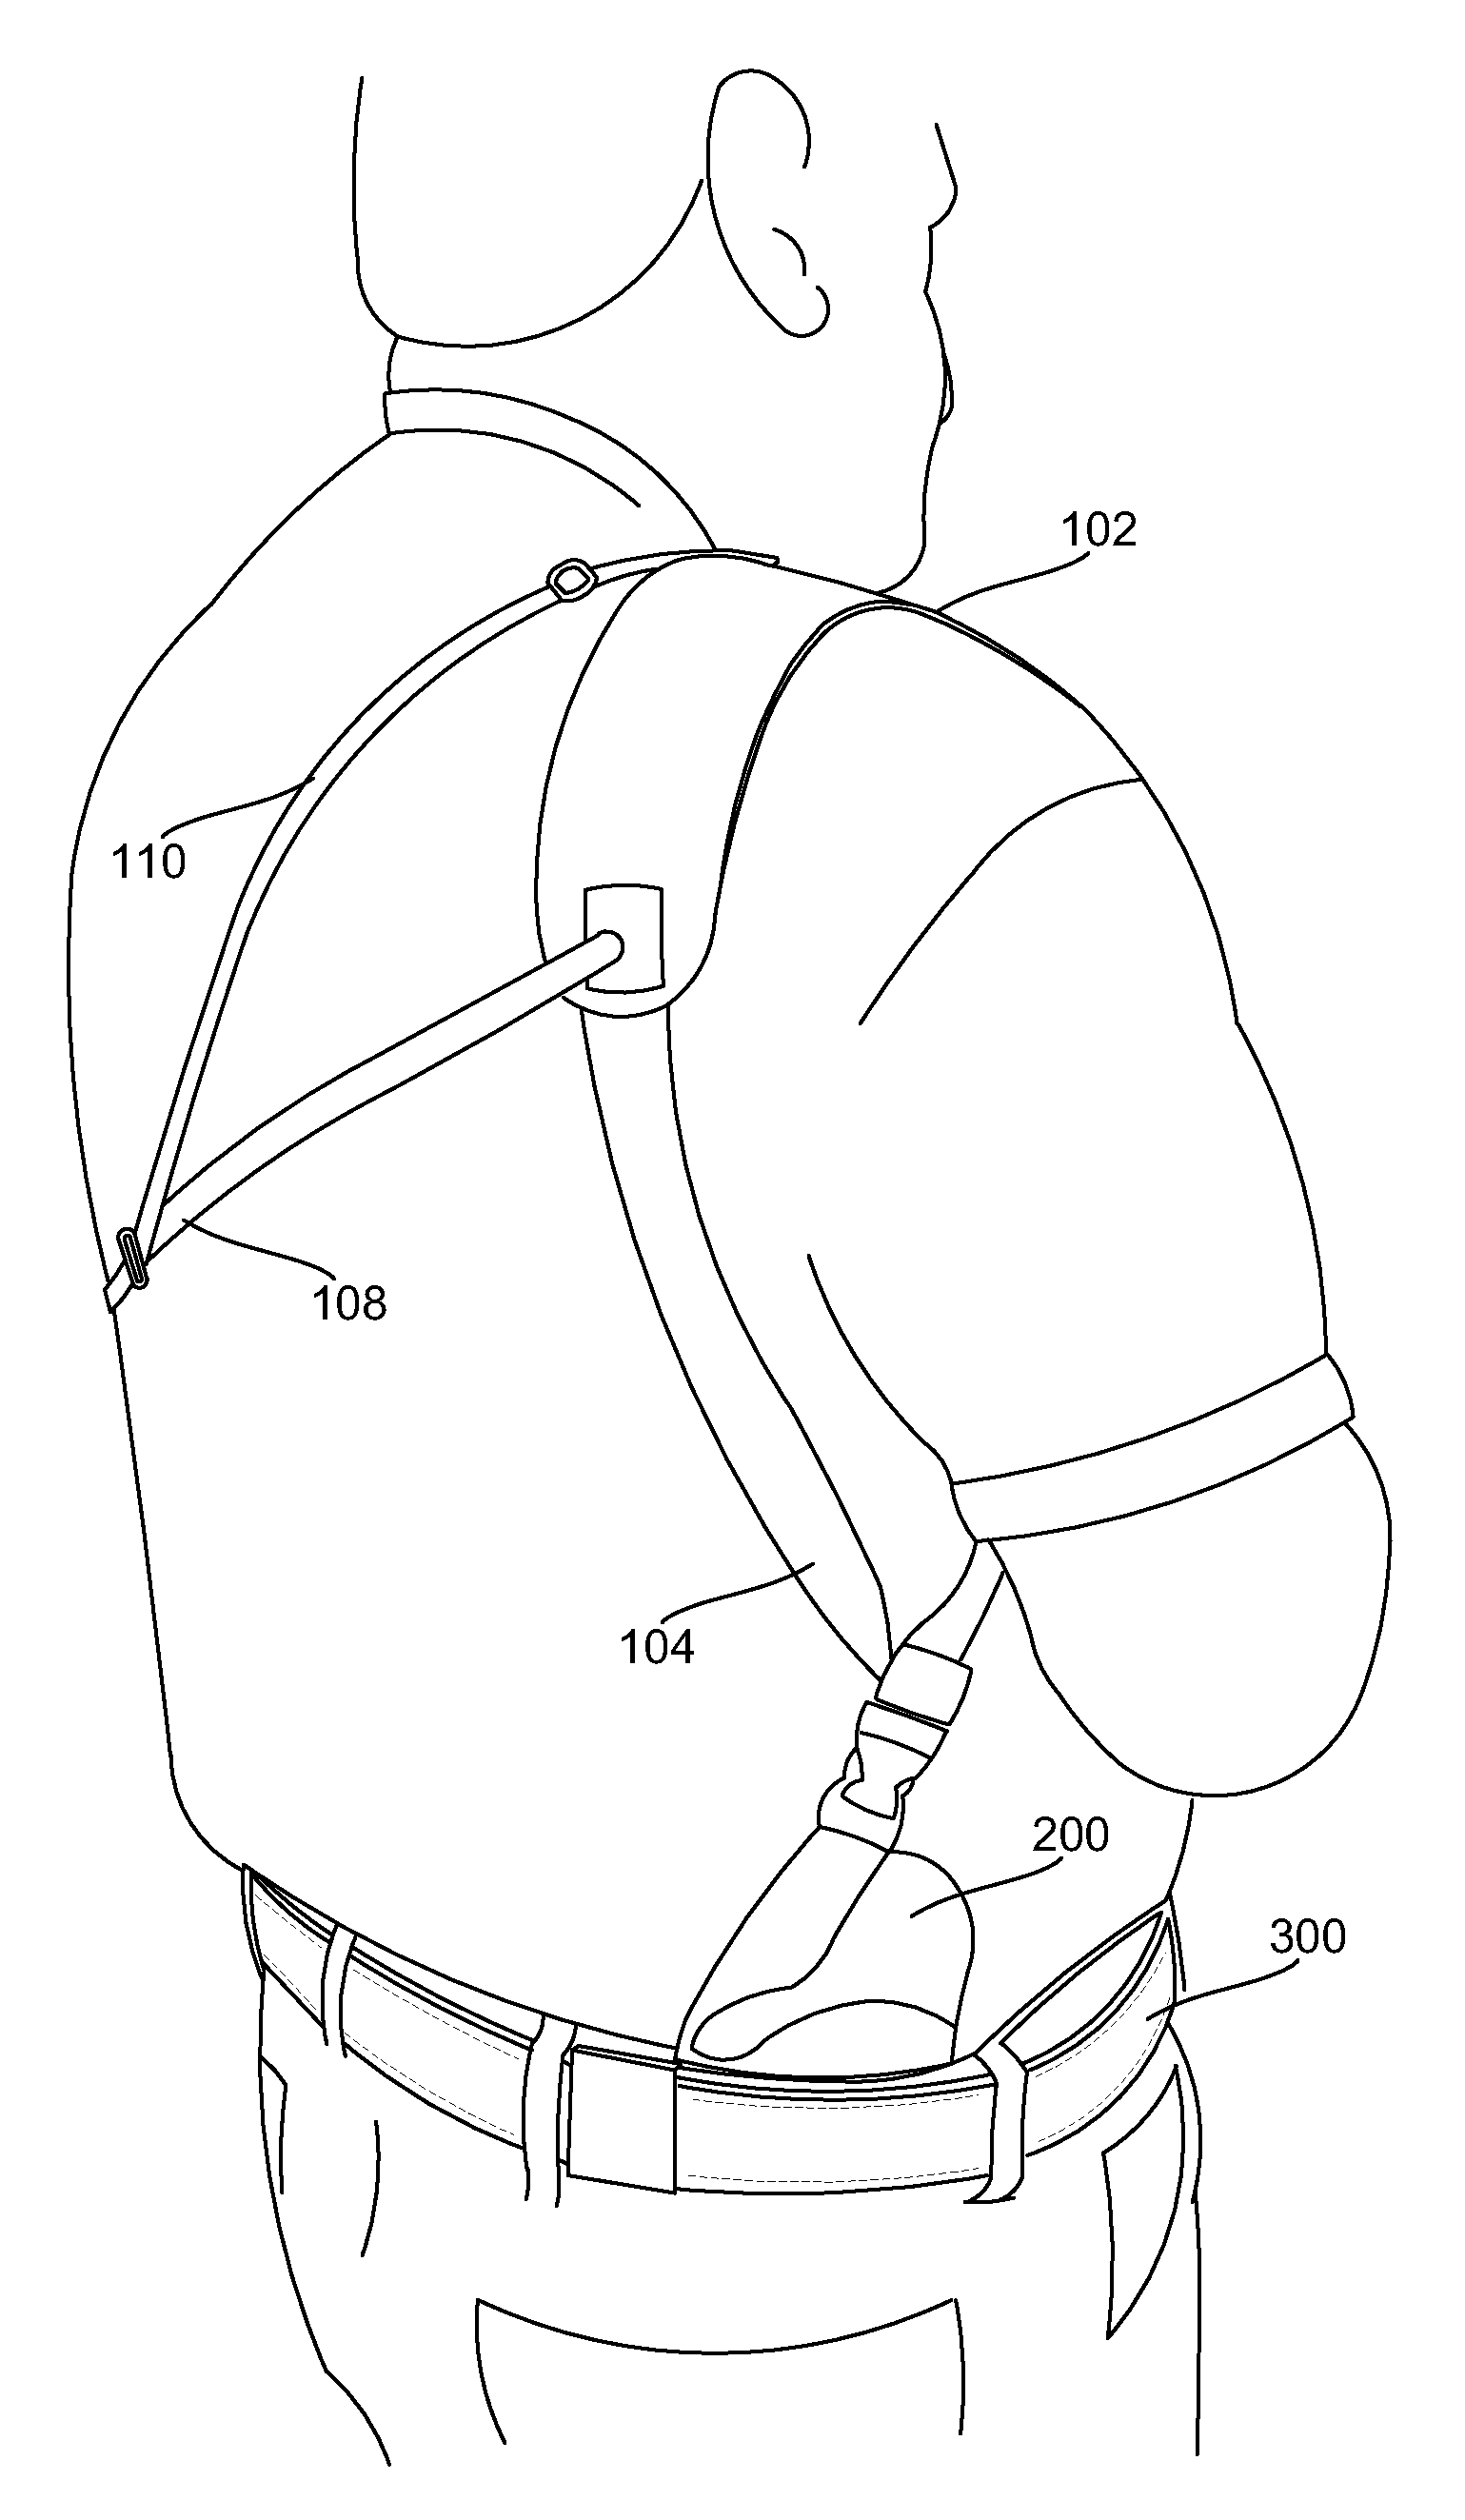 Method and system for an over the shoulder holster belt